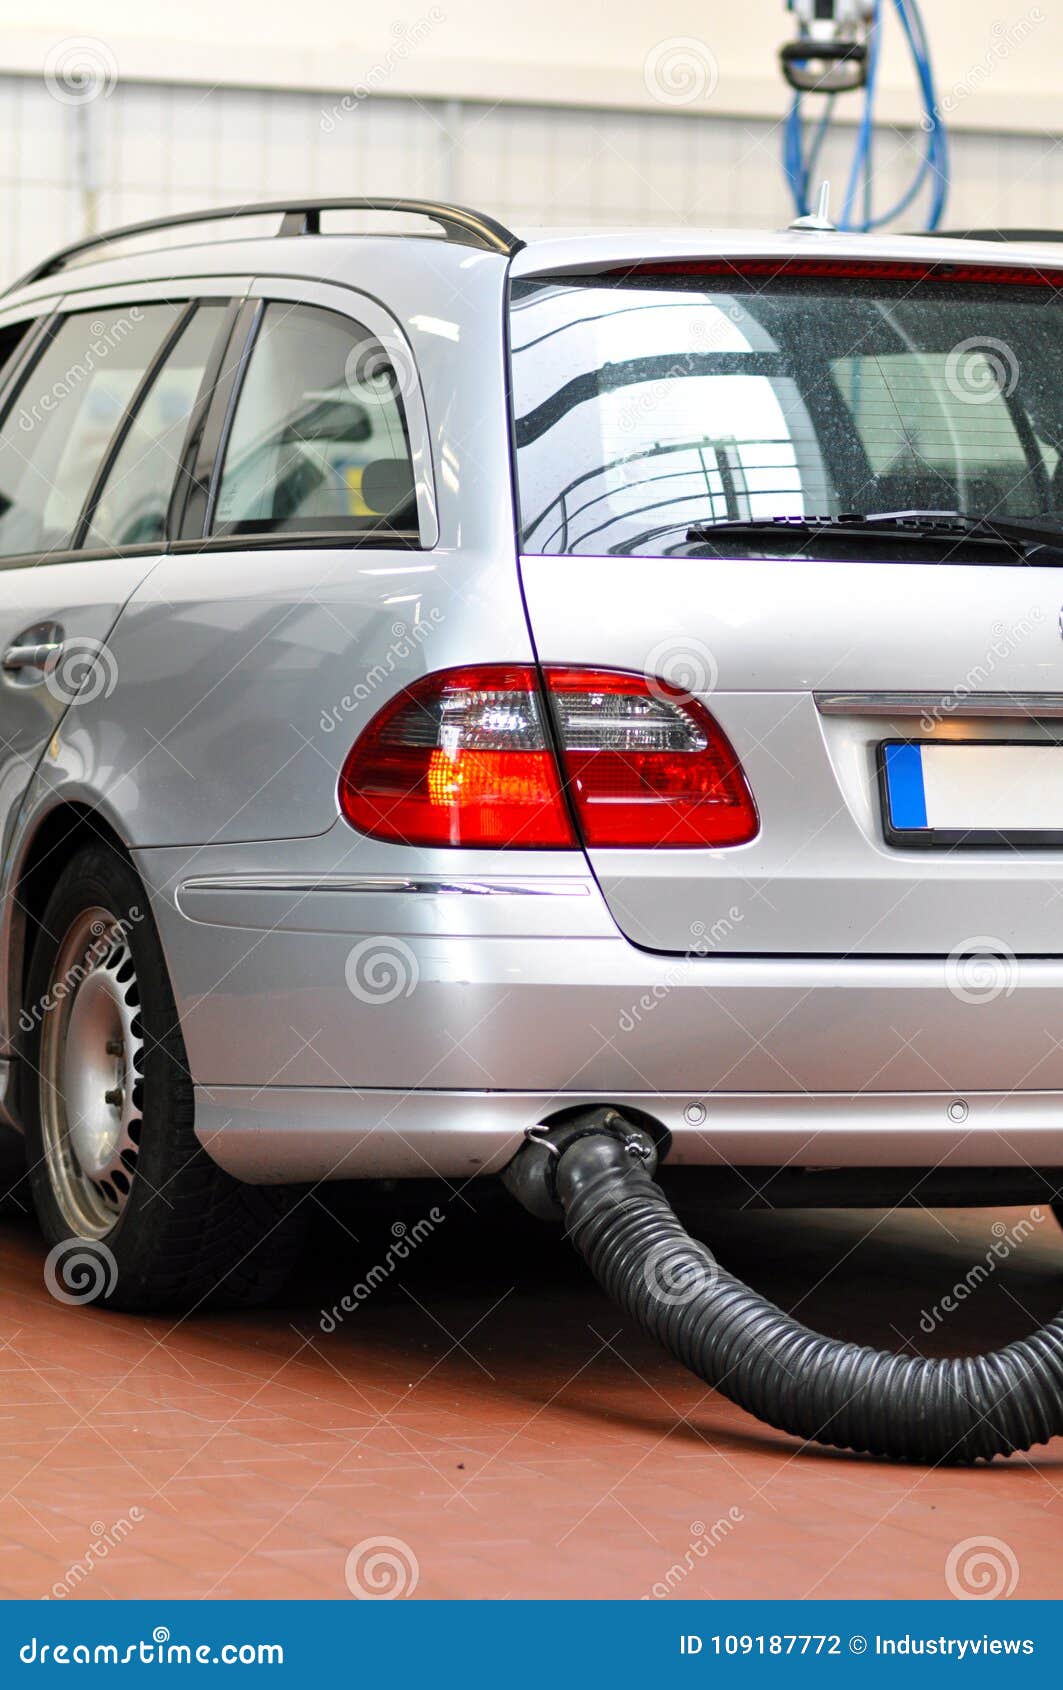 cars for emission test in a garage